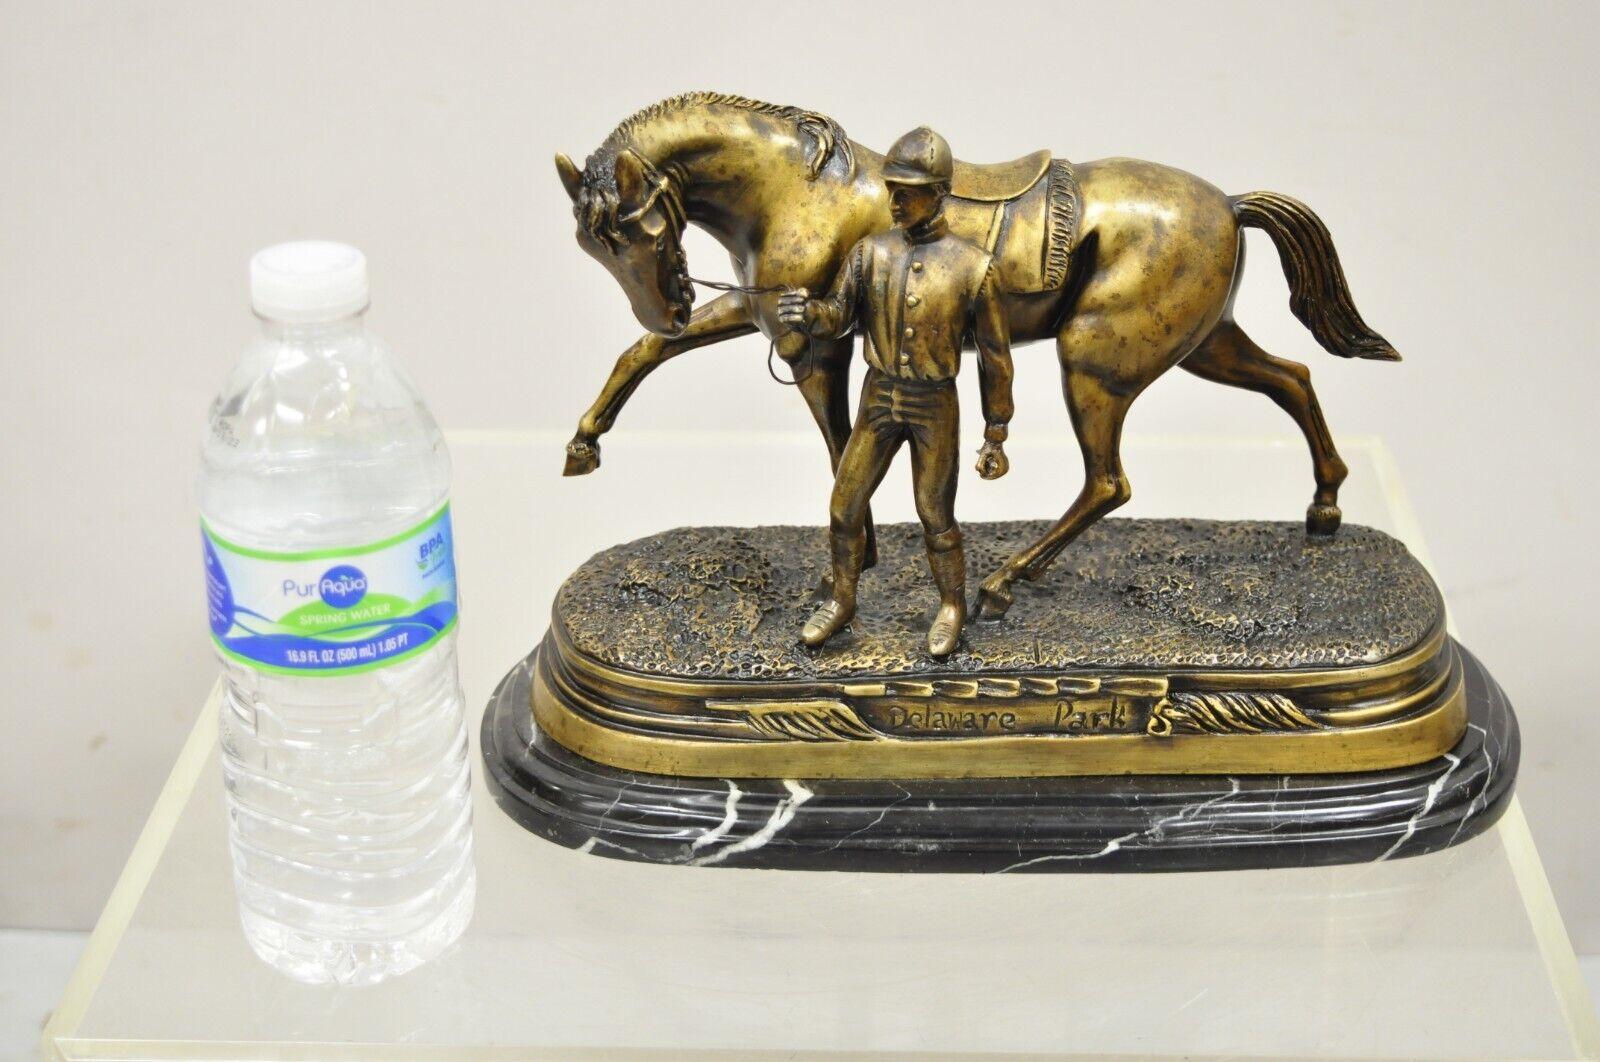 Sculpture en bronze du Delaware Park, cheval Jockey et cheval Jockey 4